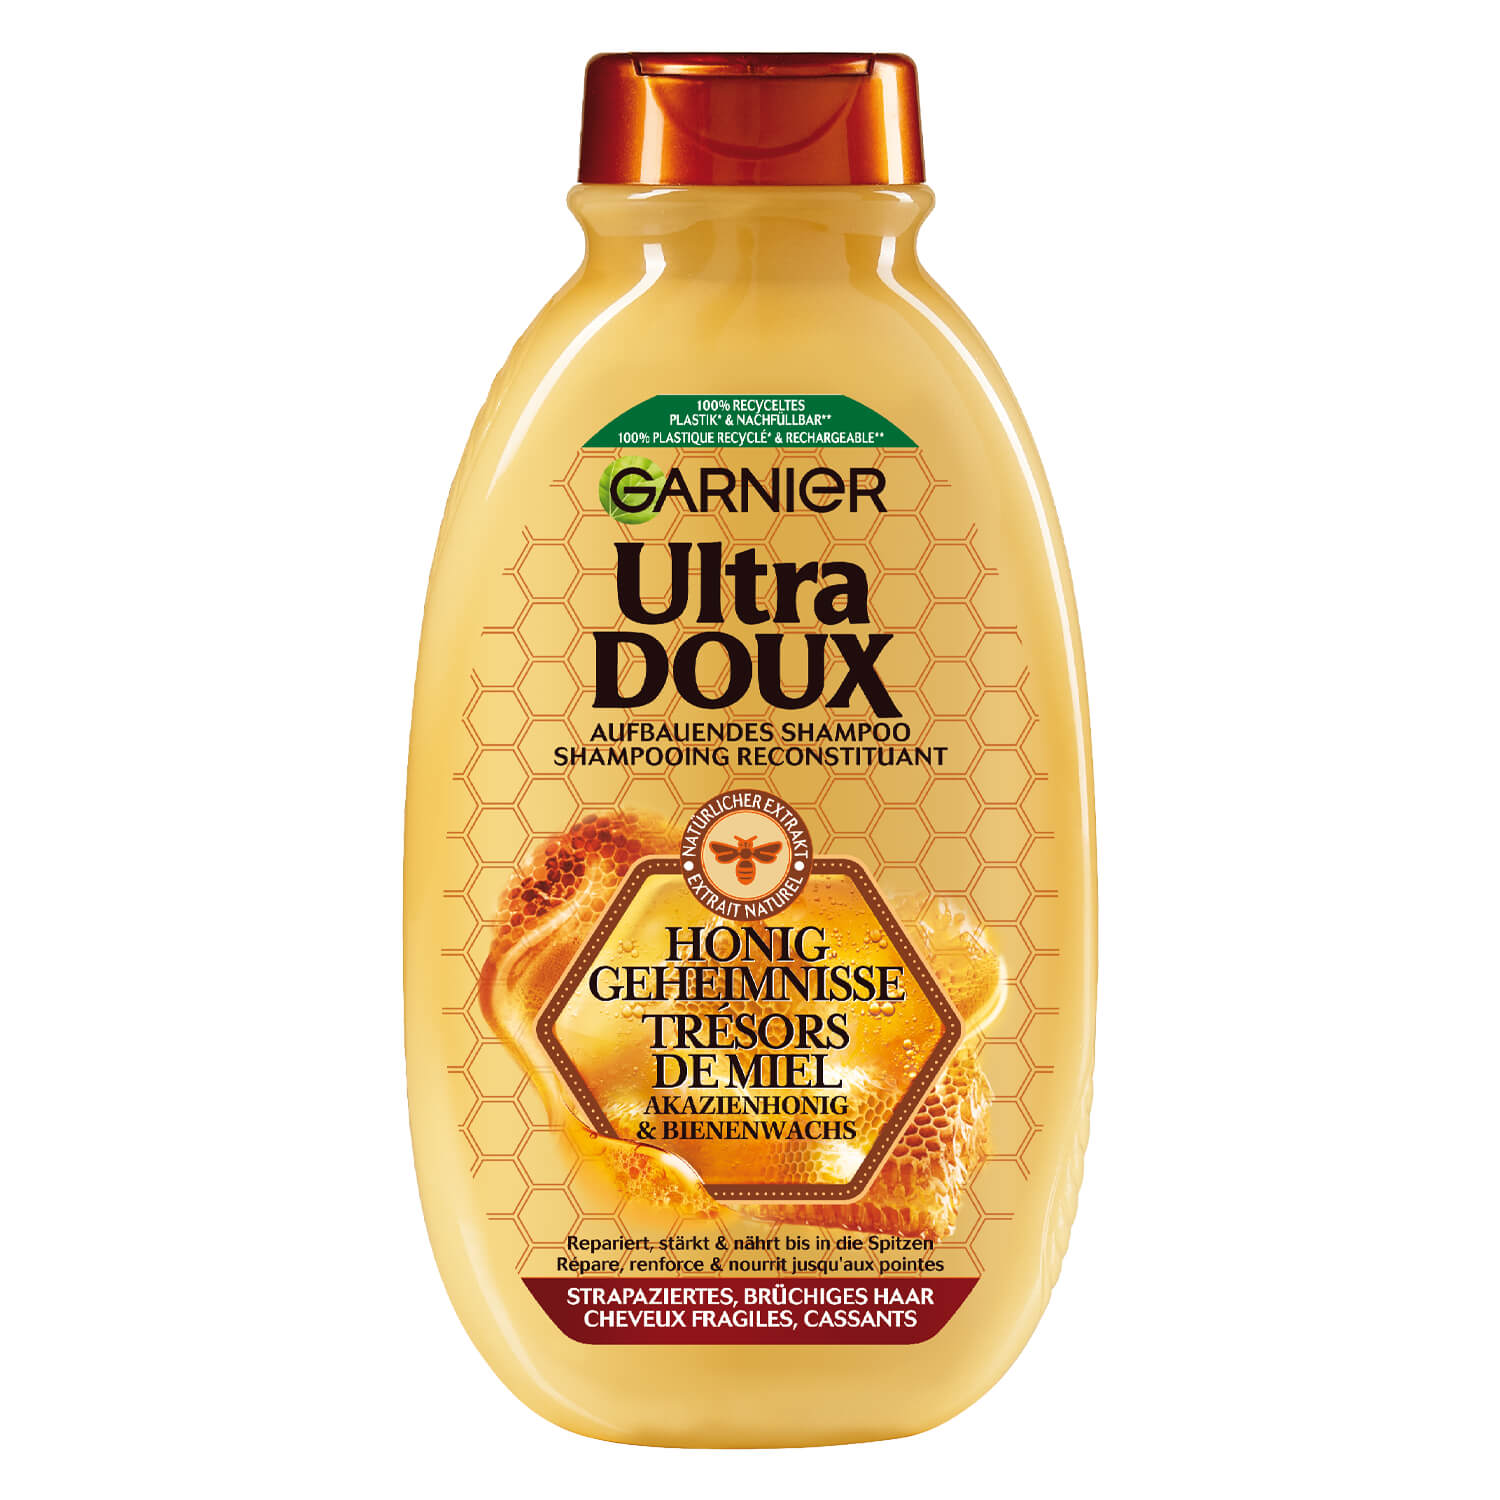 Doux Haircare Honey Restorative Shampoo | PerfectHair.ch